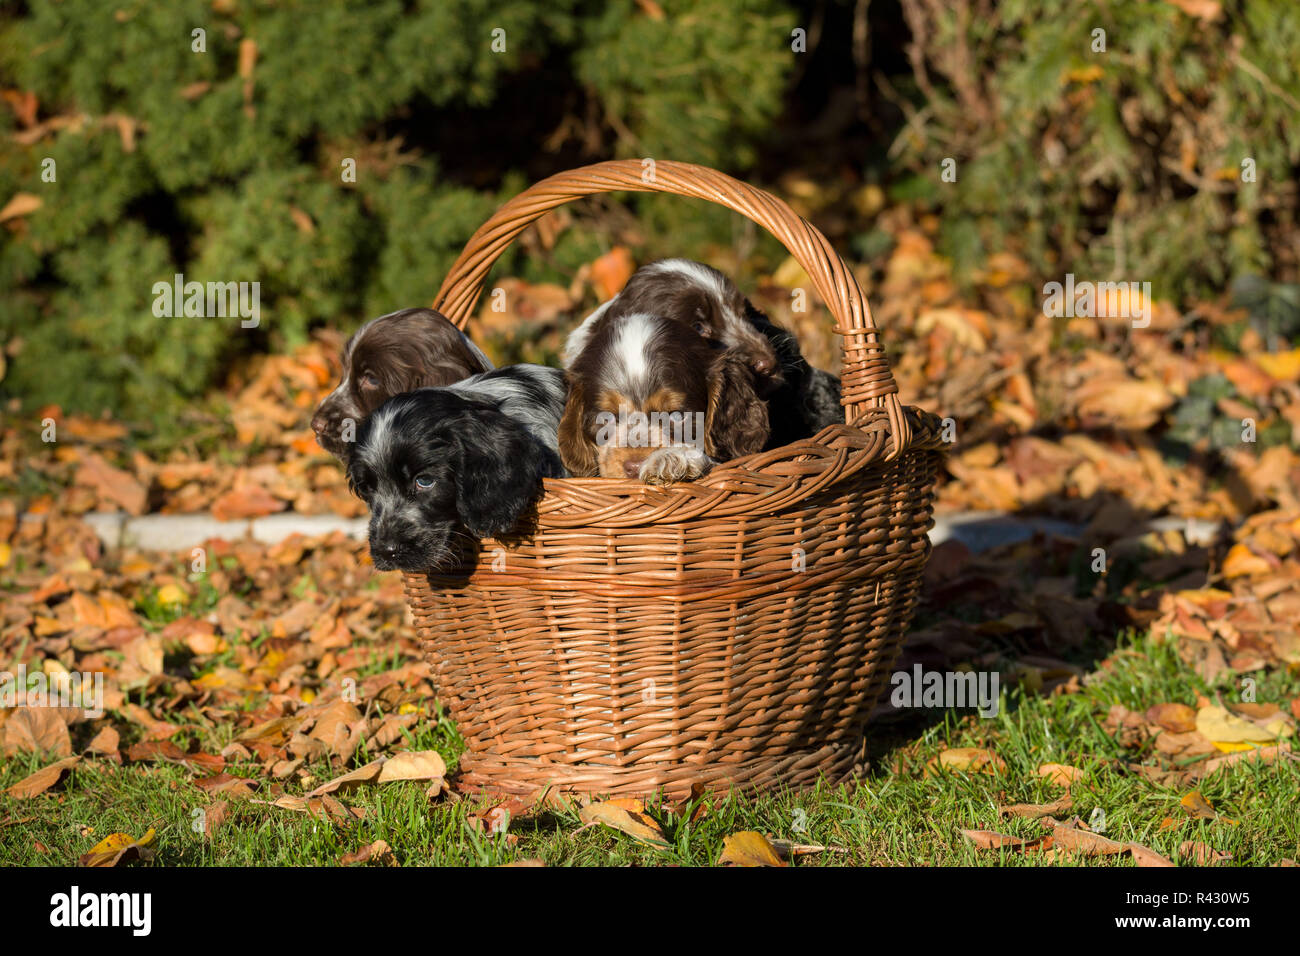 English Cocker Spaniel puppy in basket Stock Photo